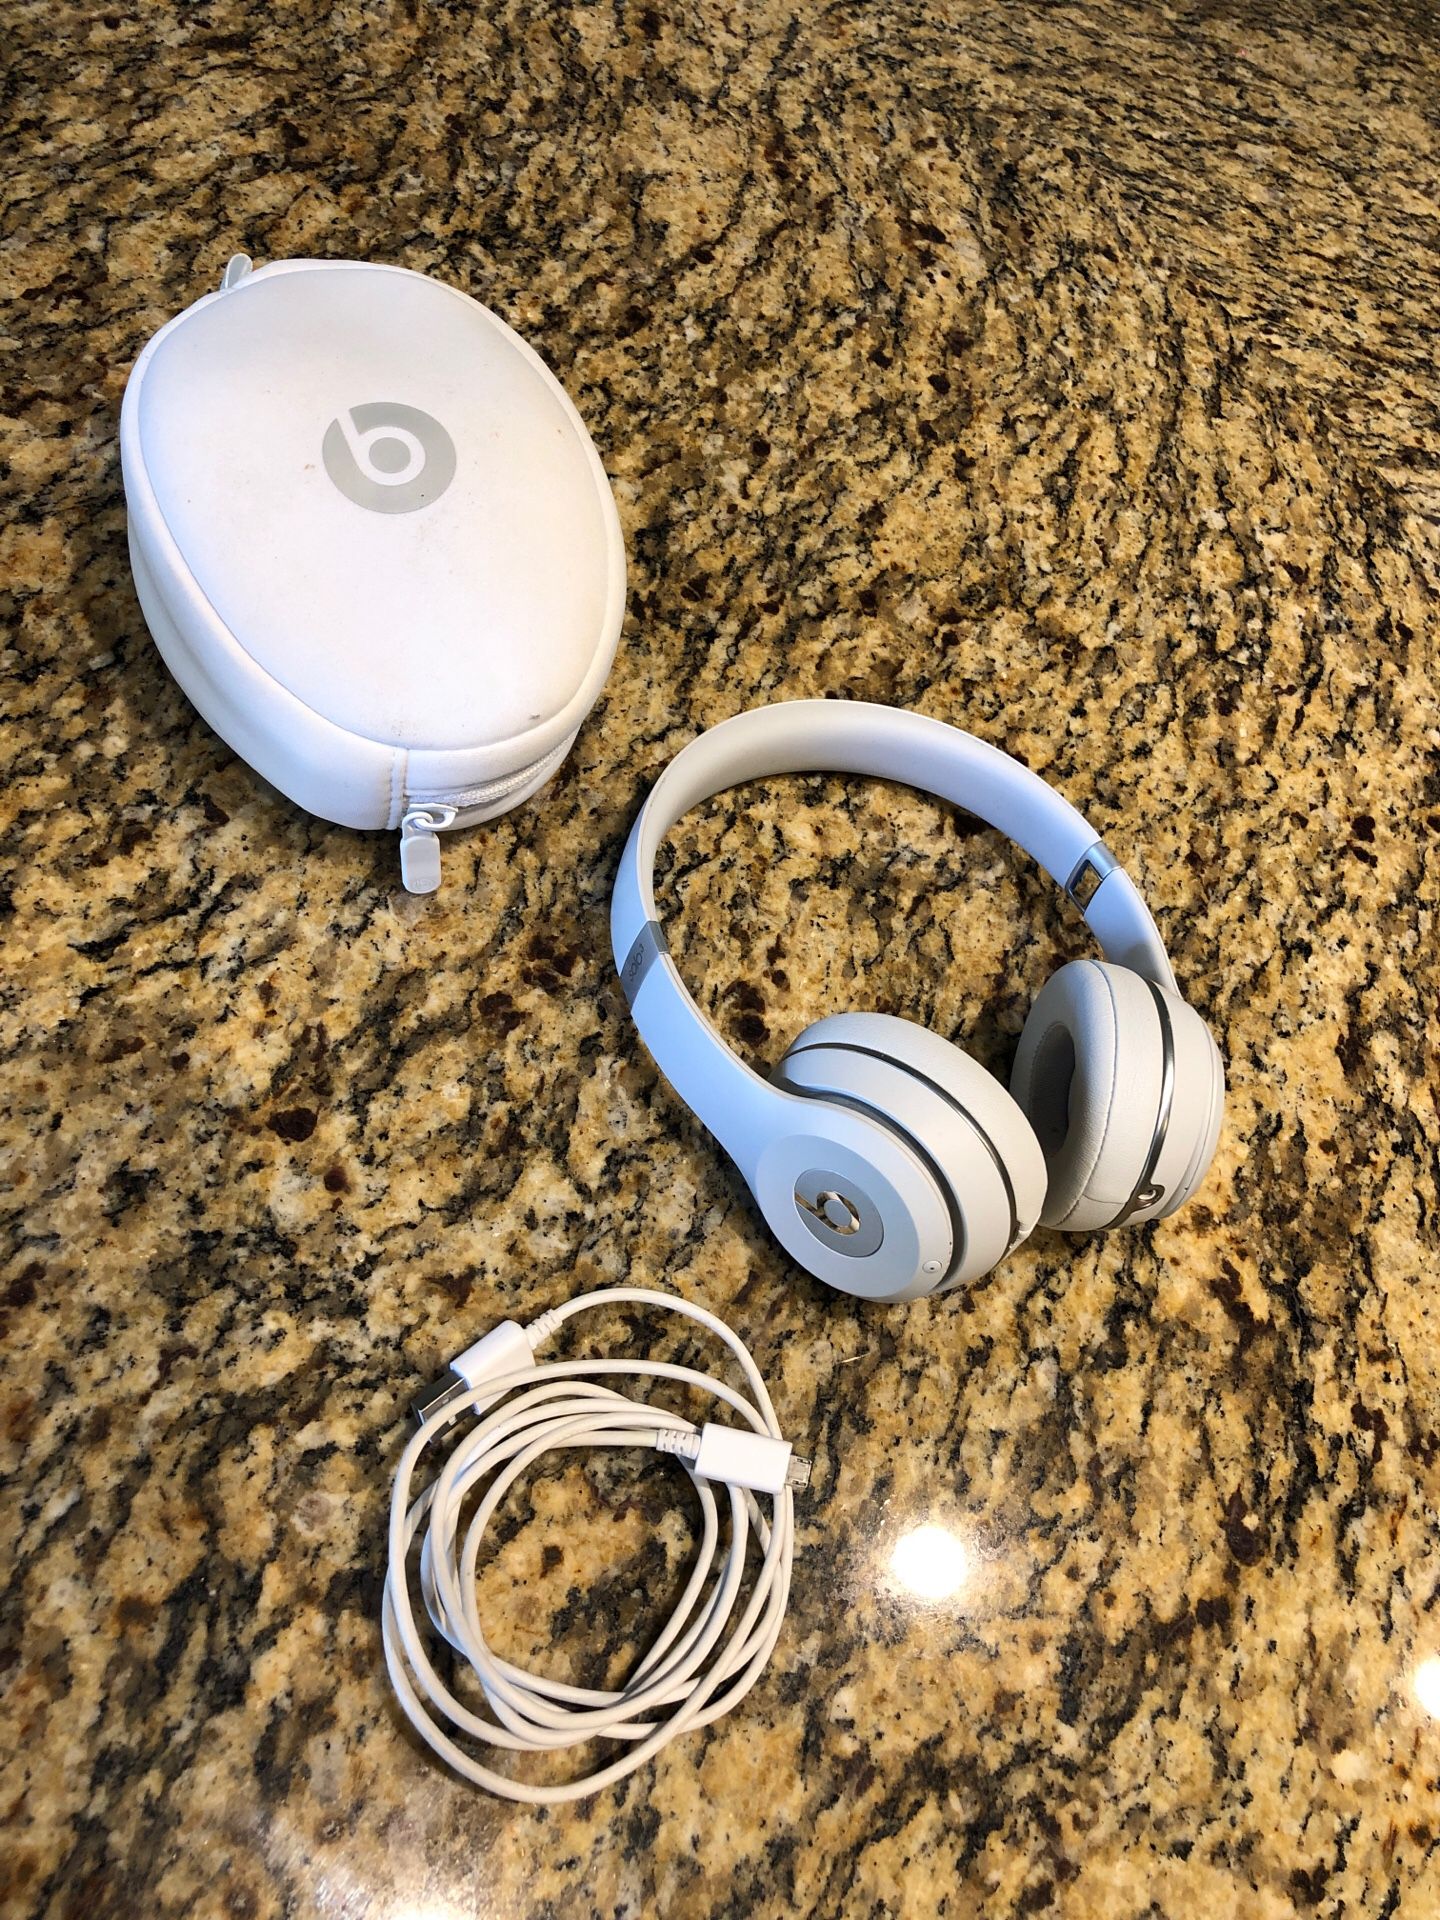 Beats Solo 3 wireless headphones